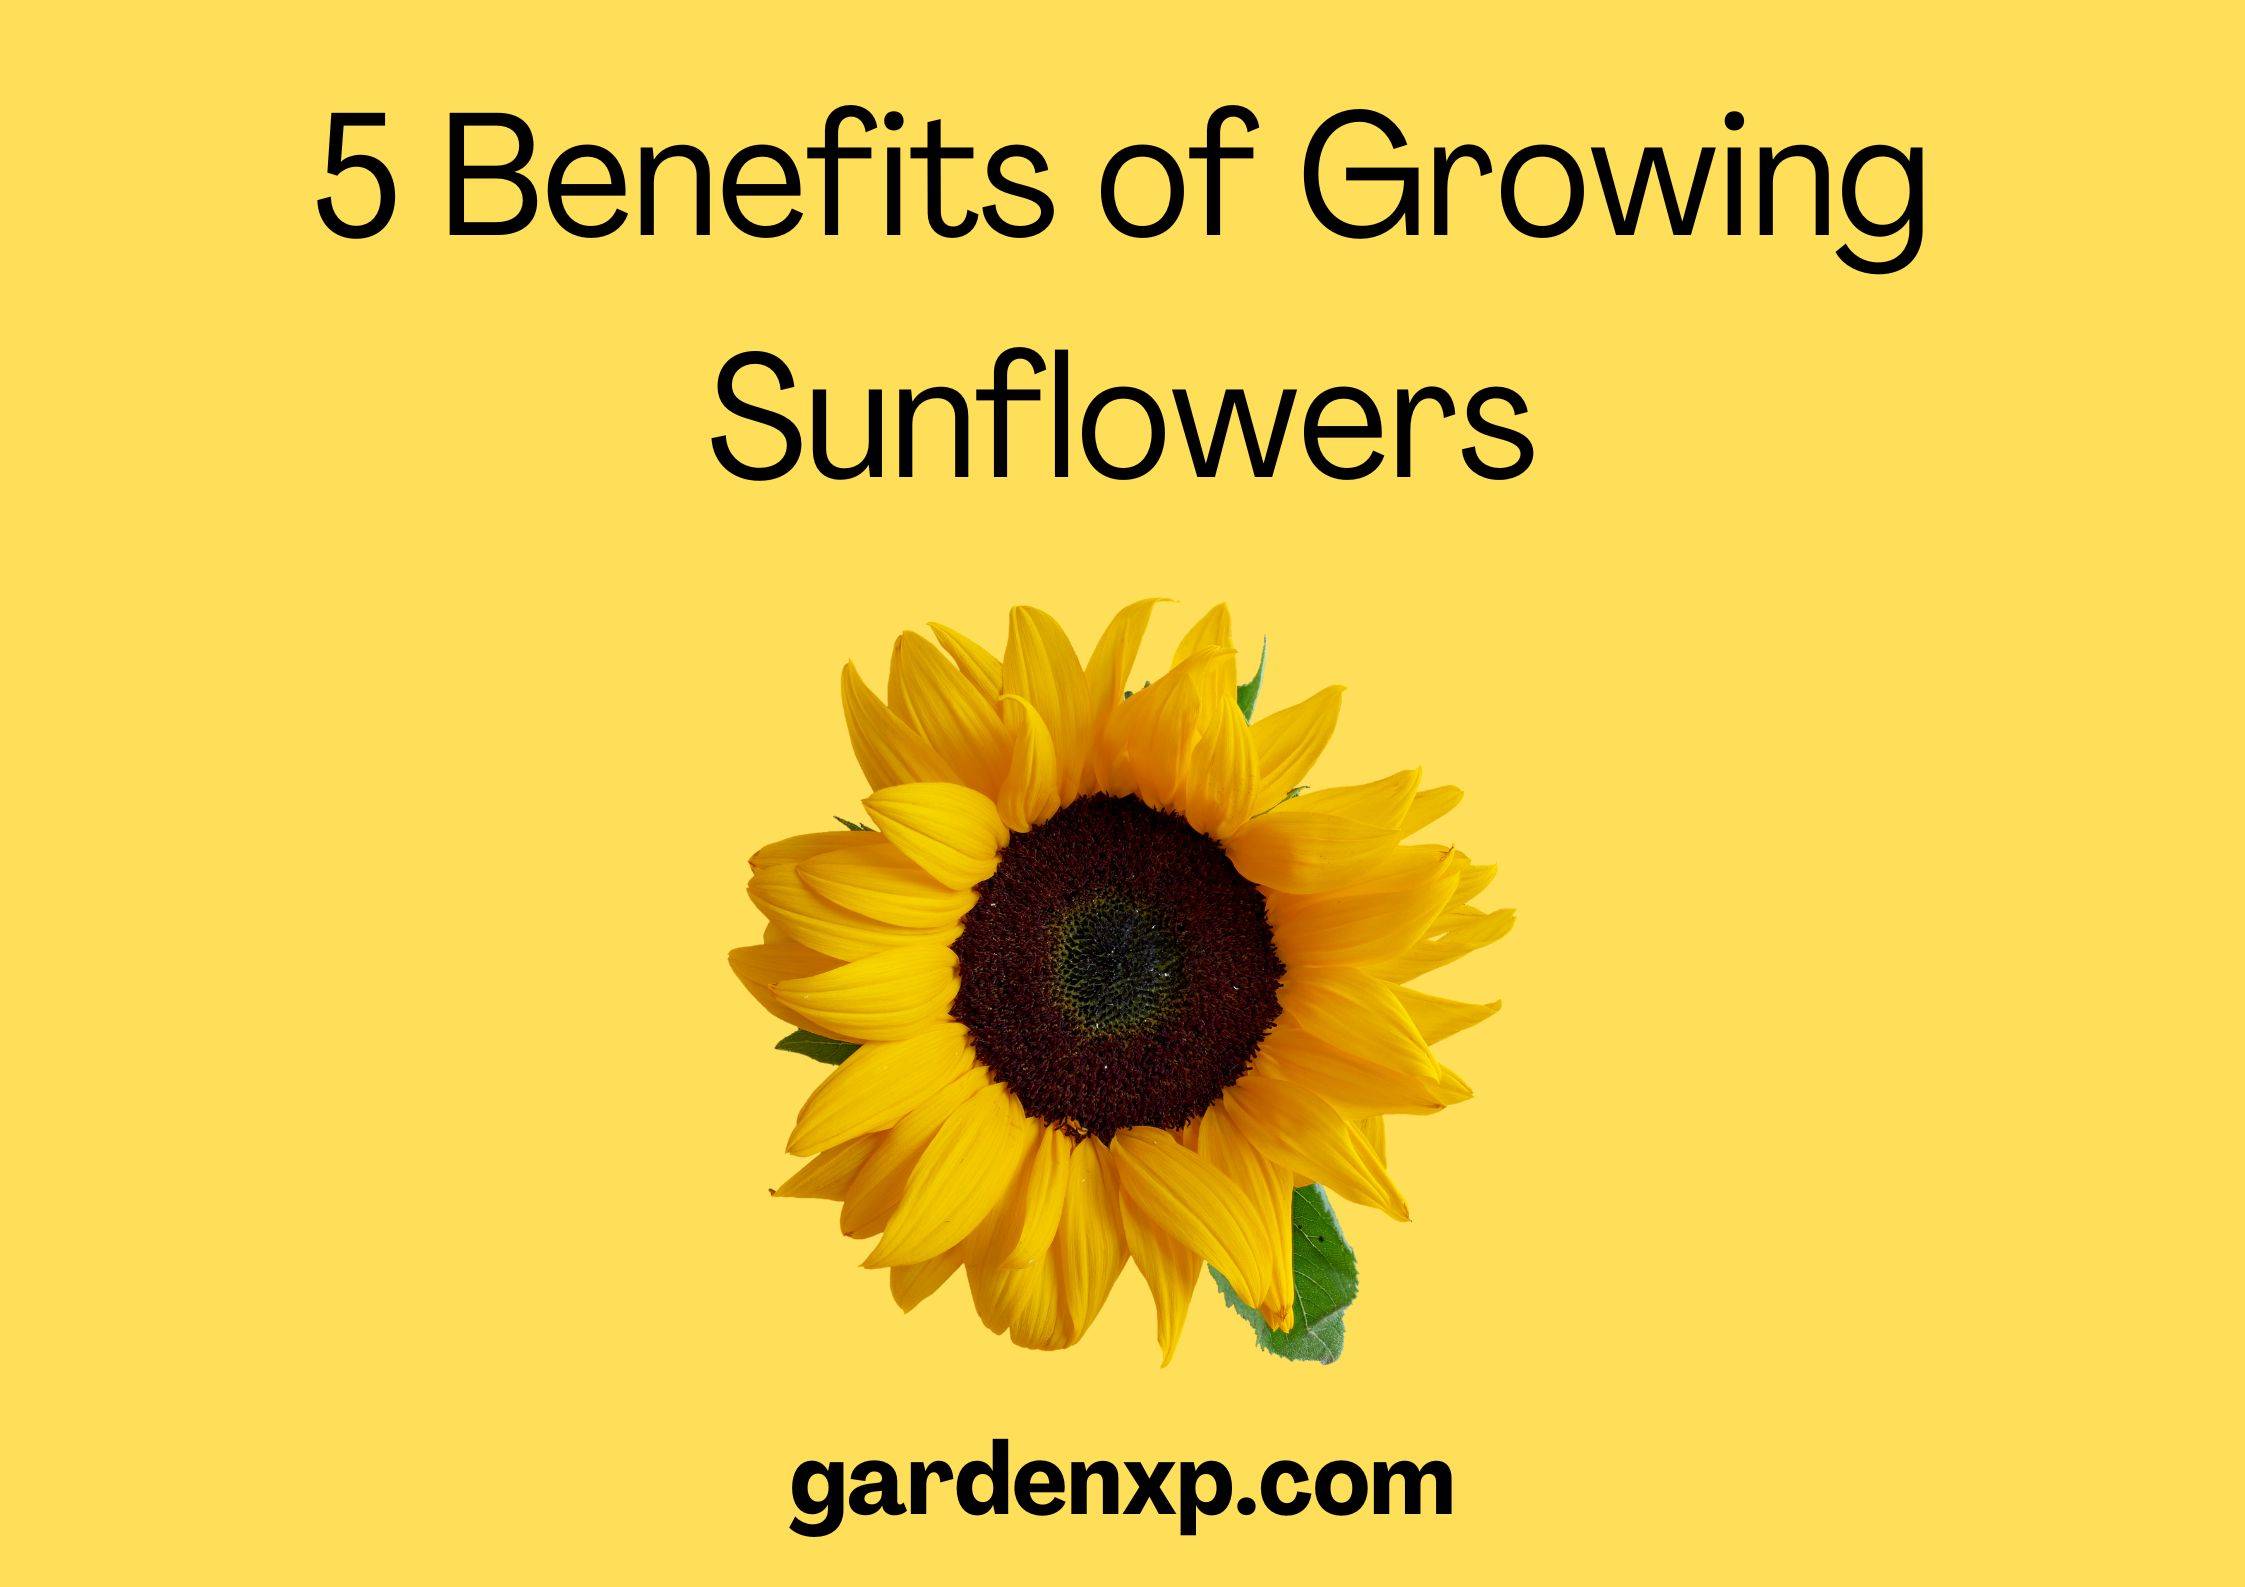 5 Benefits of Growing Sunflowers